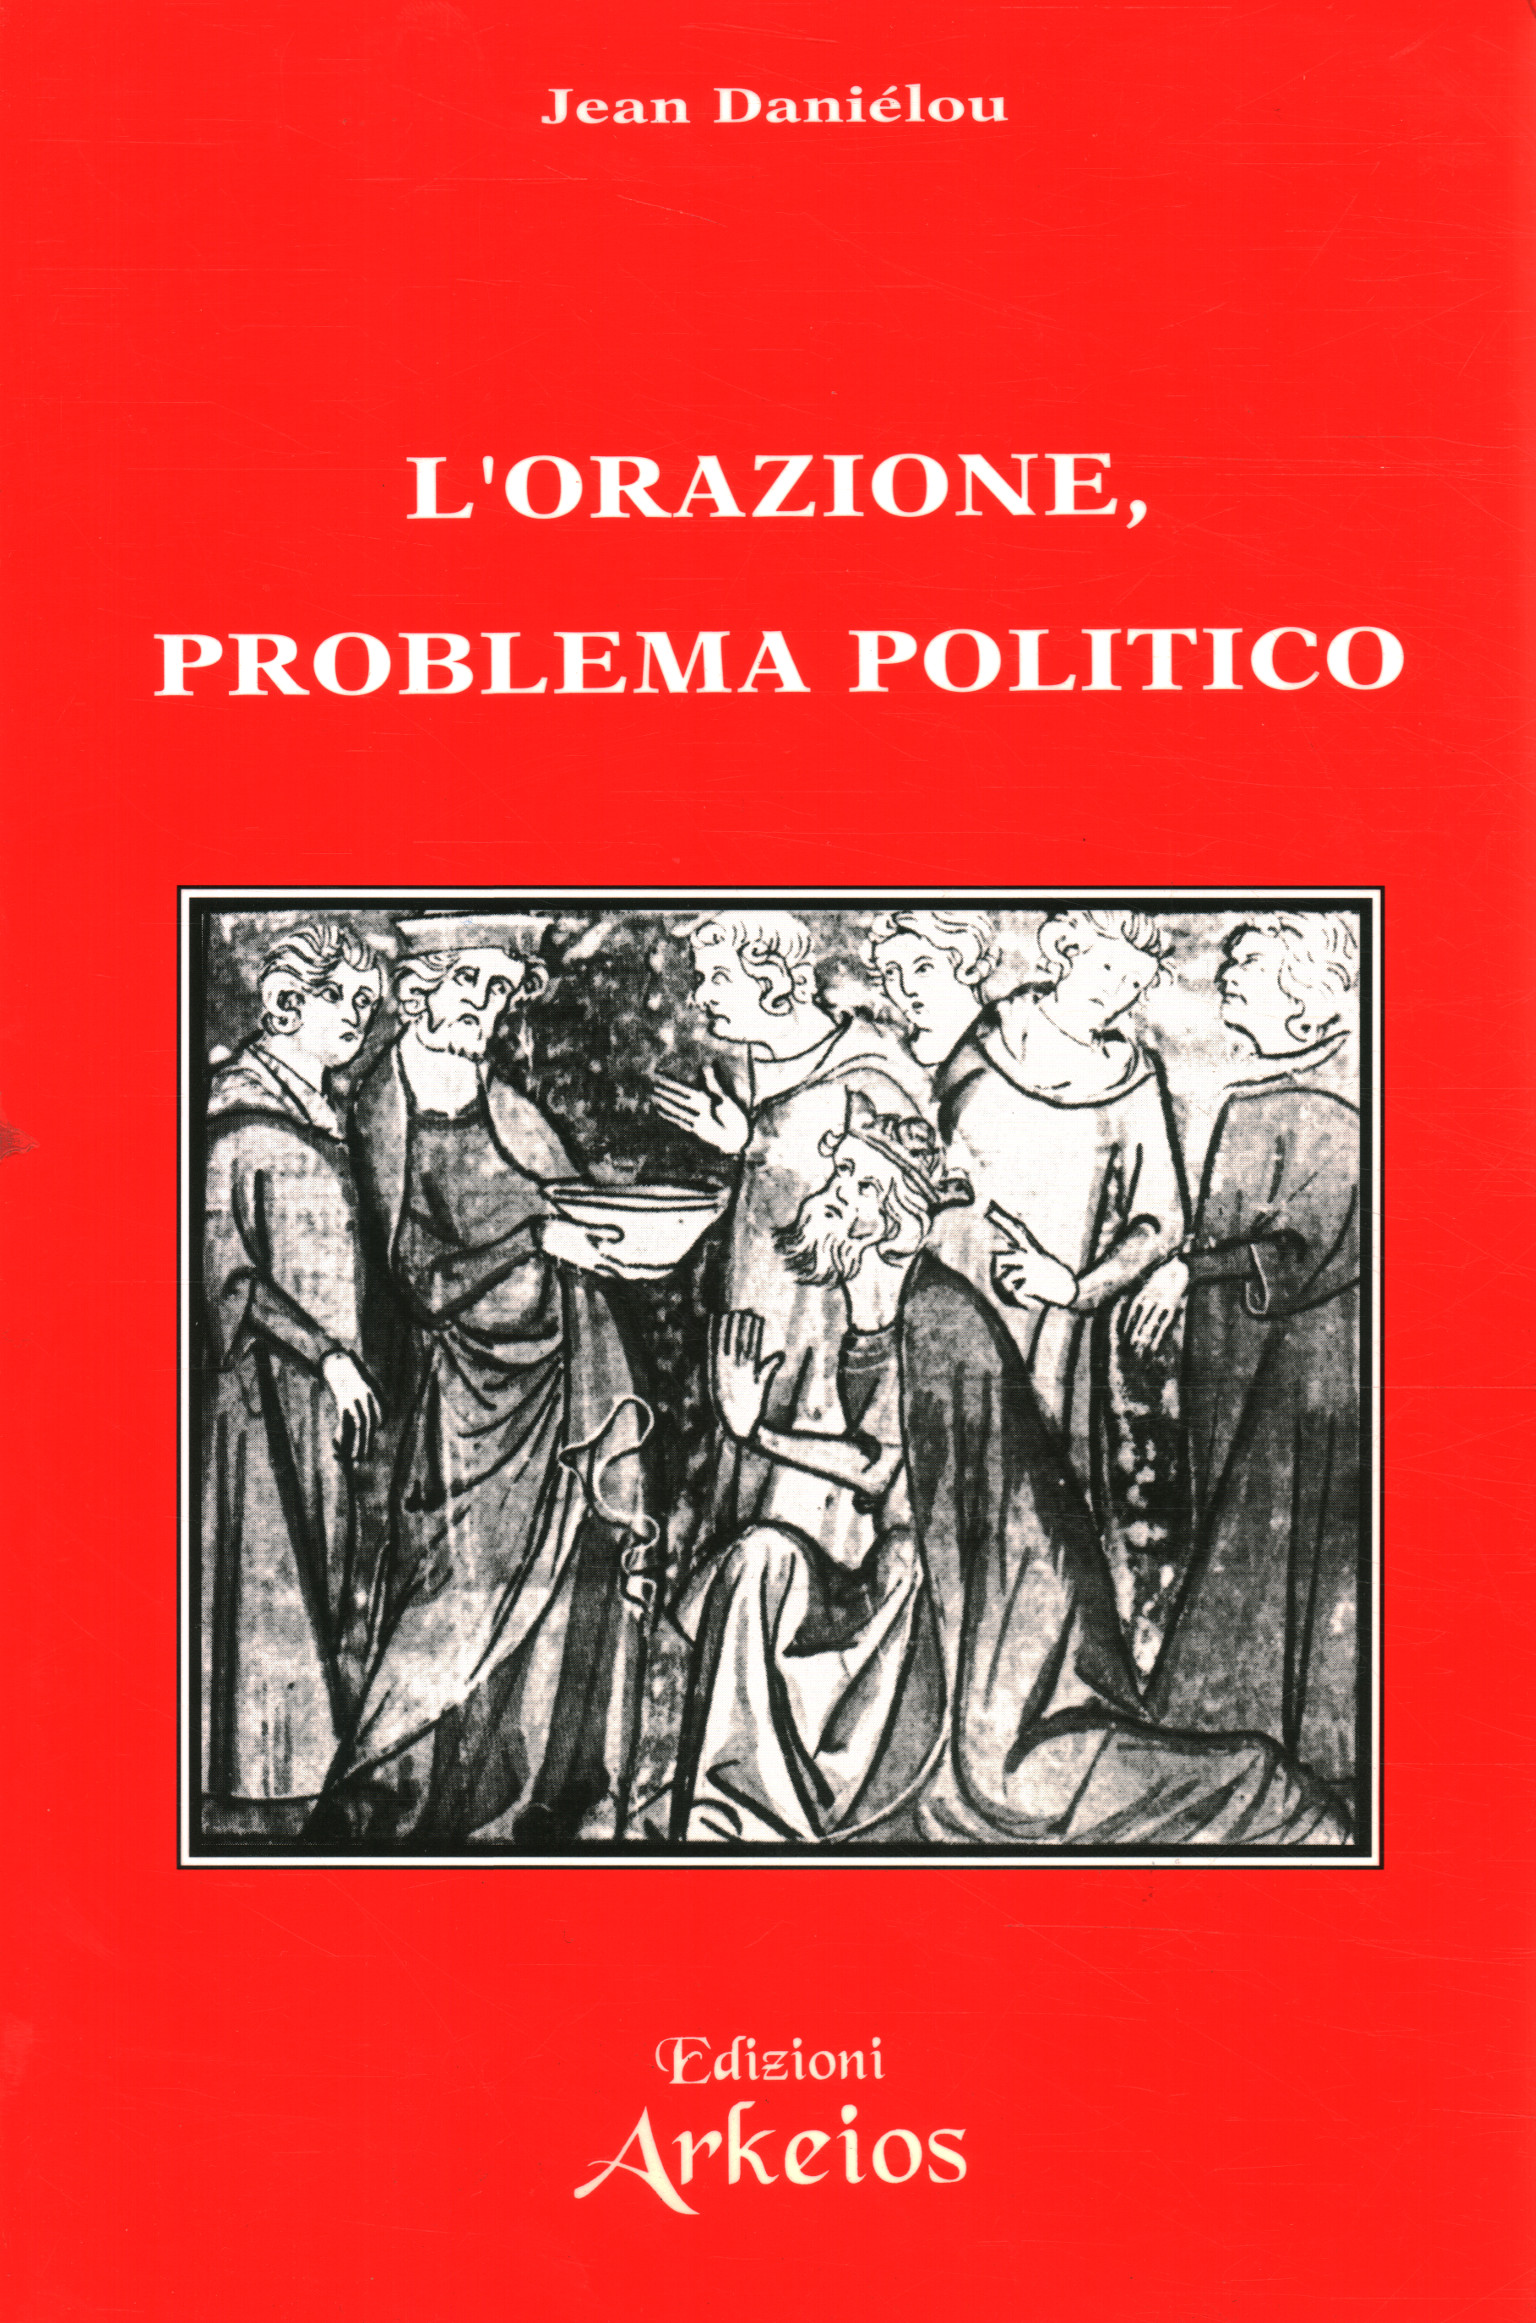 The political problem oration